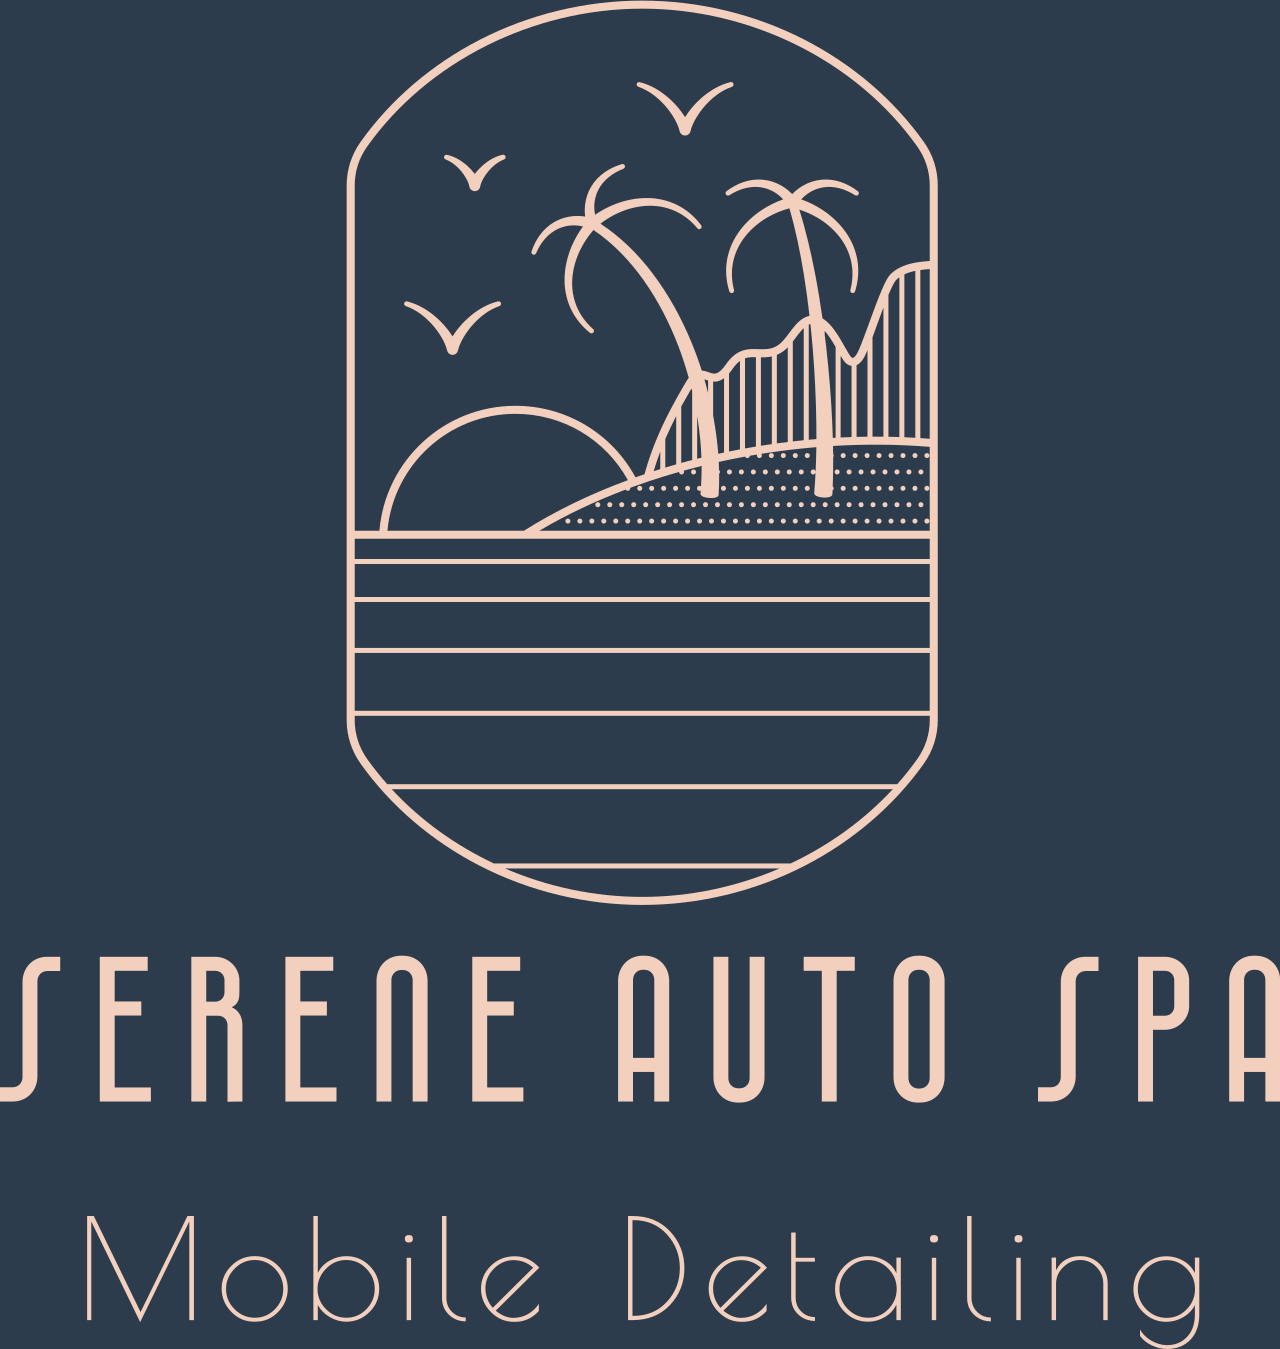 Serene Auto Spa's logo